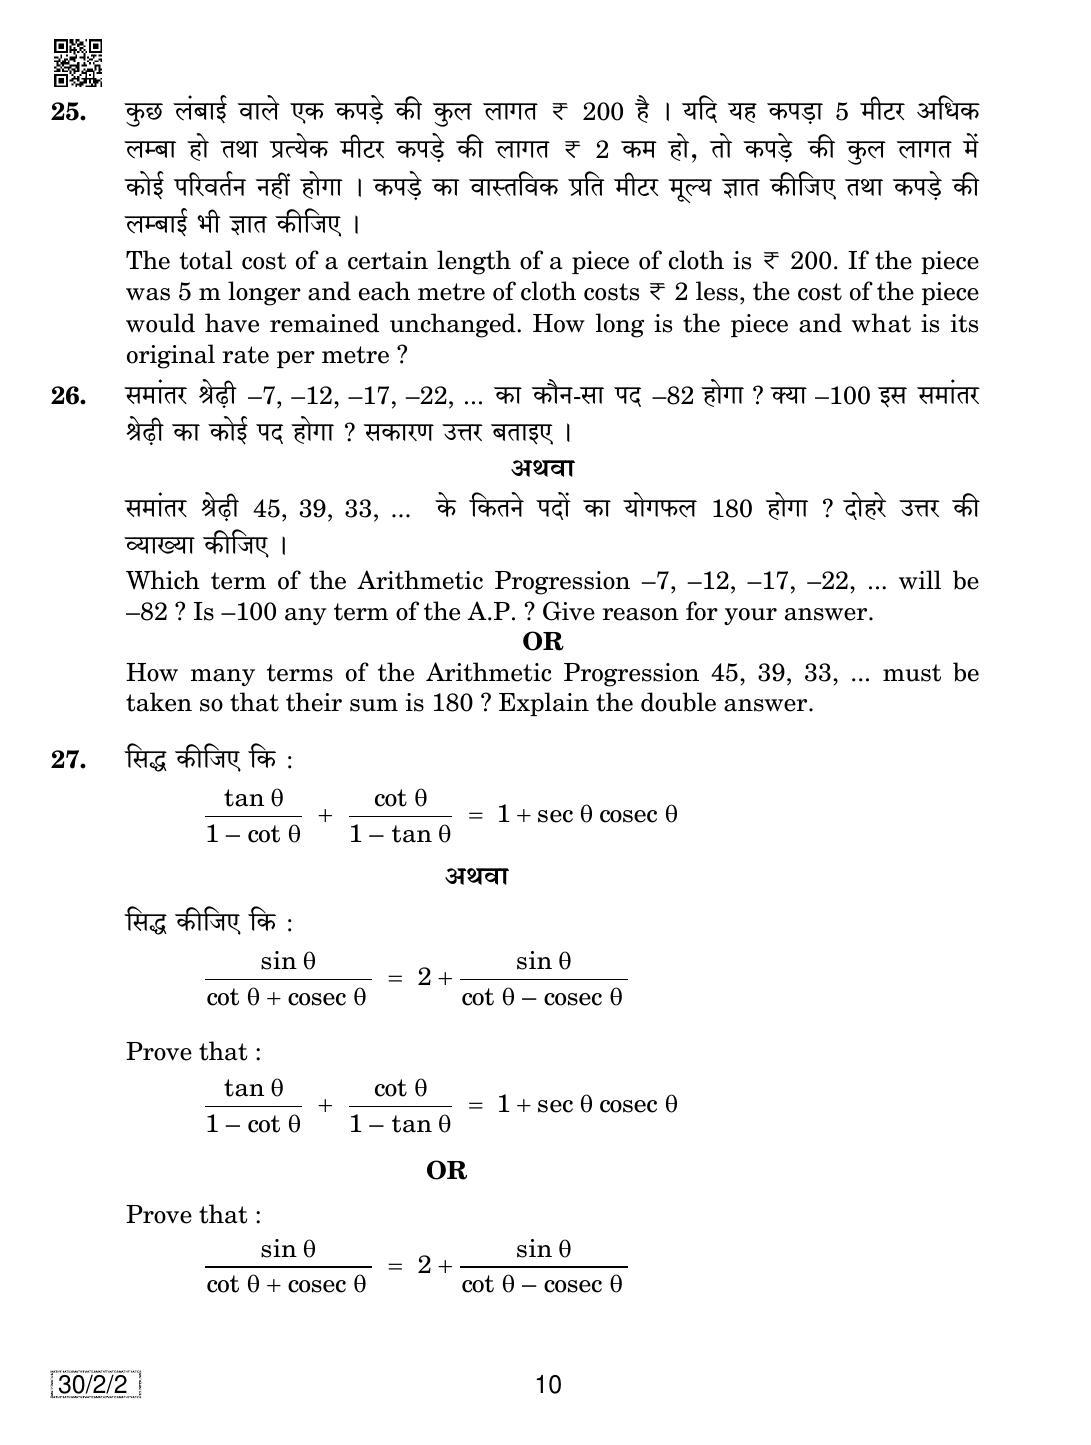 CBSE Class 10 Maths (30/2/2 - SET 2) 2019 Question Paper - Page 10